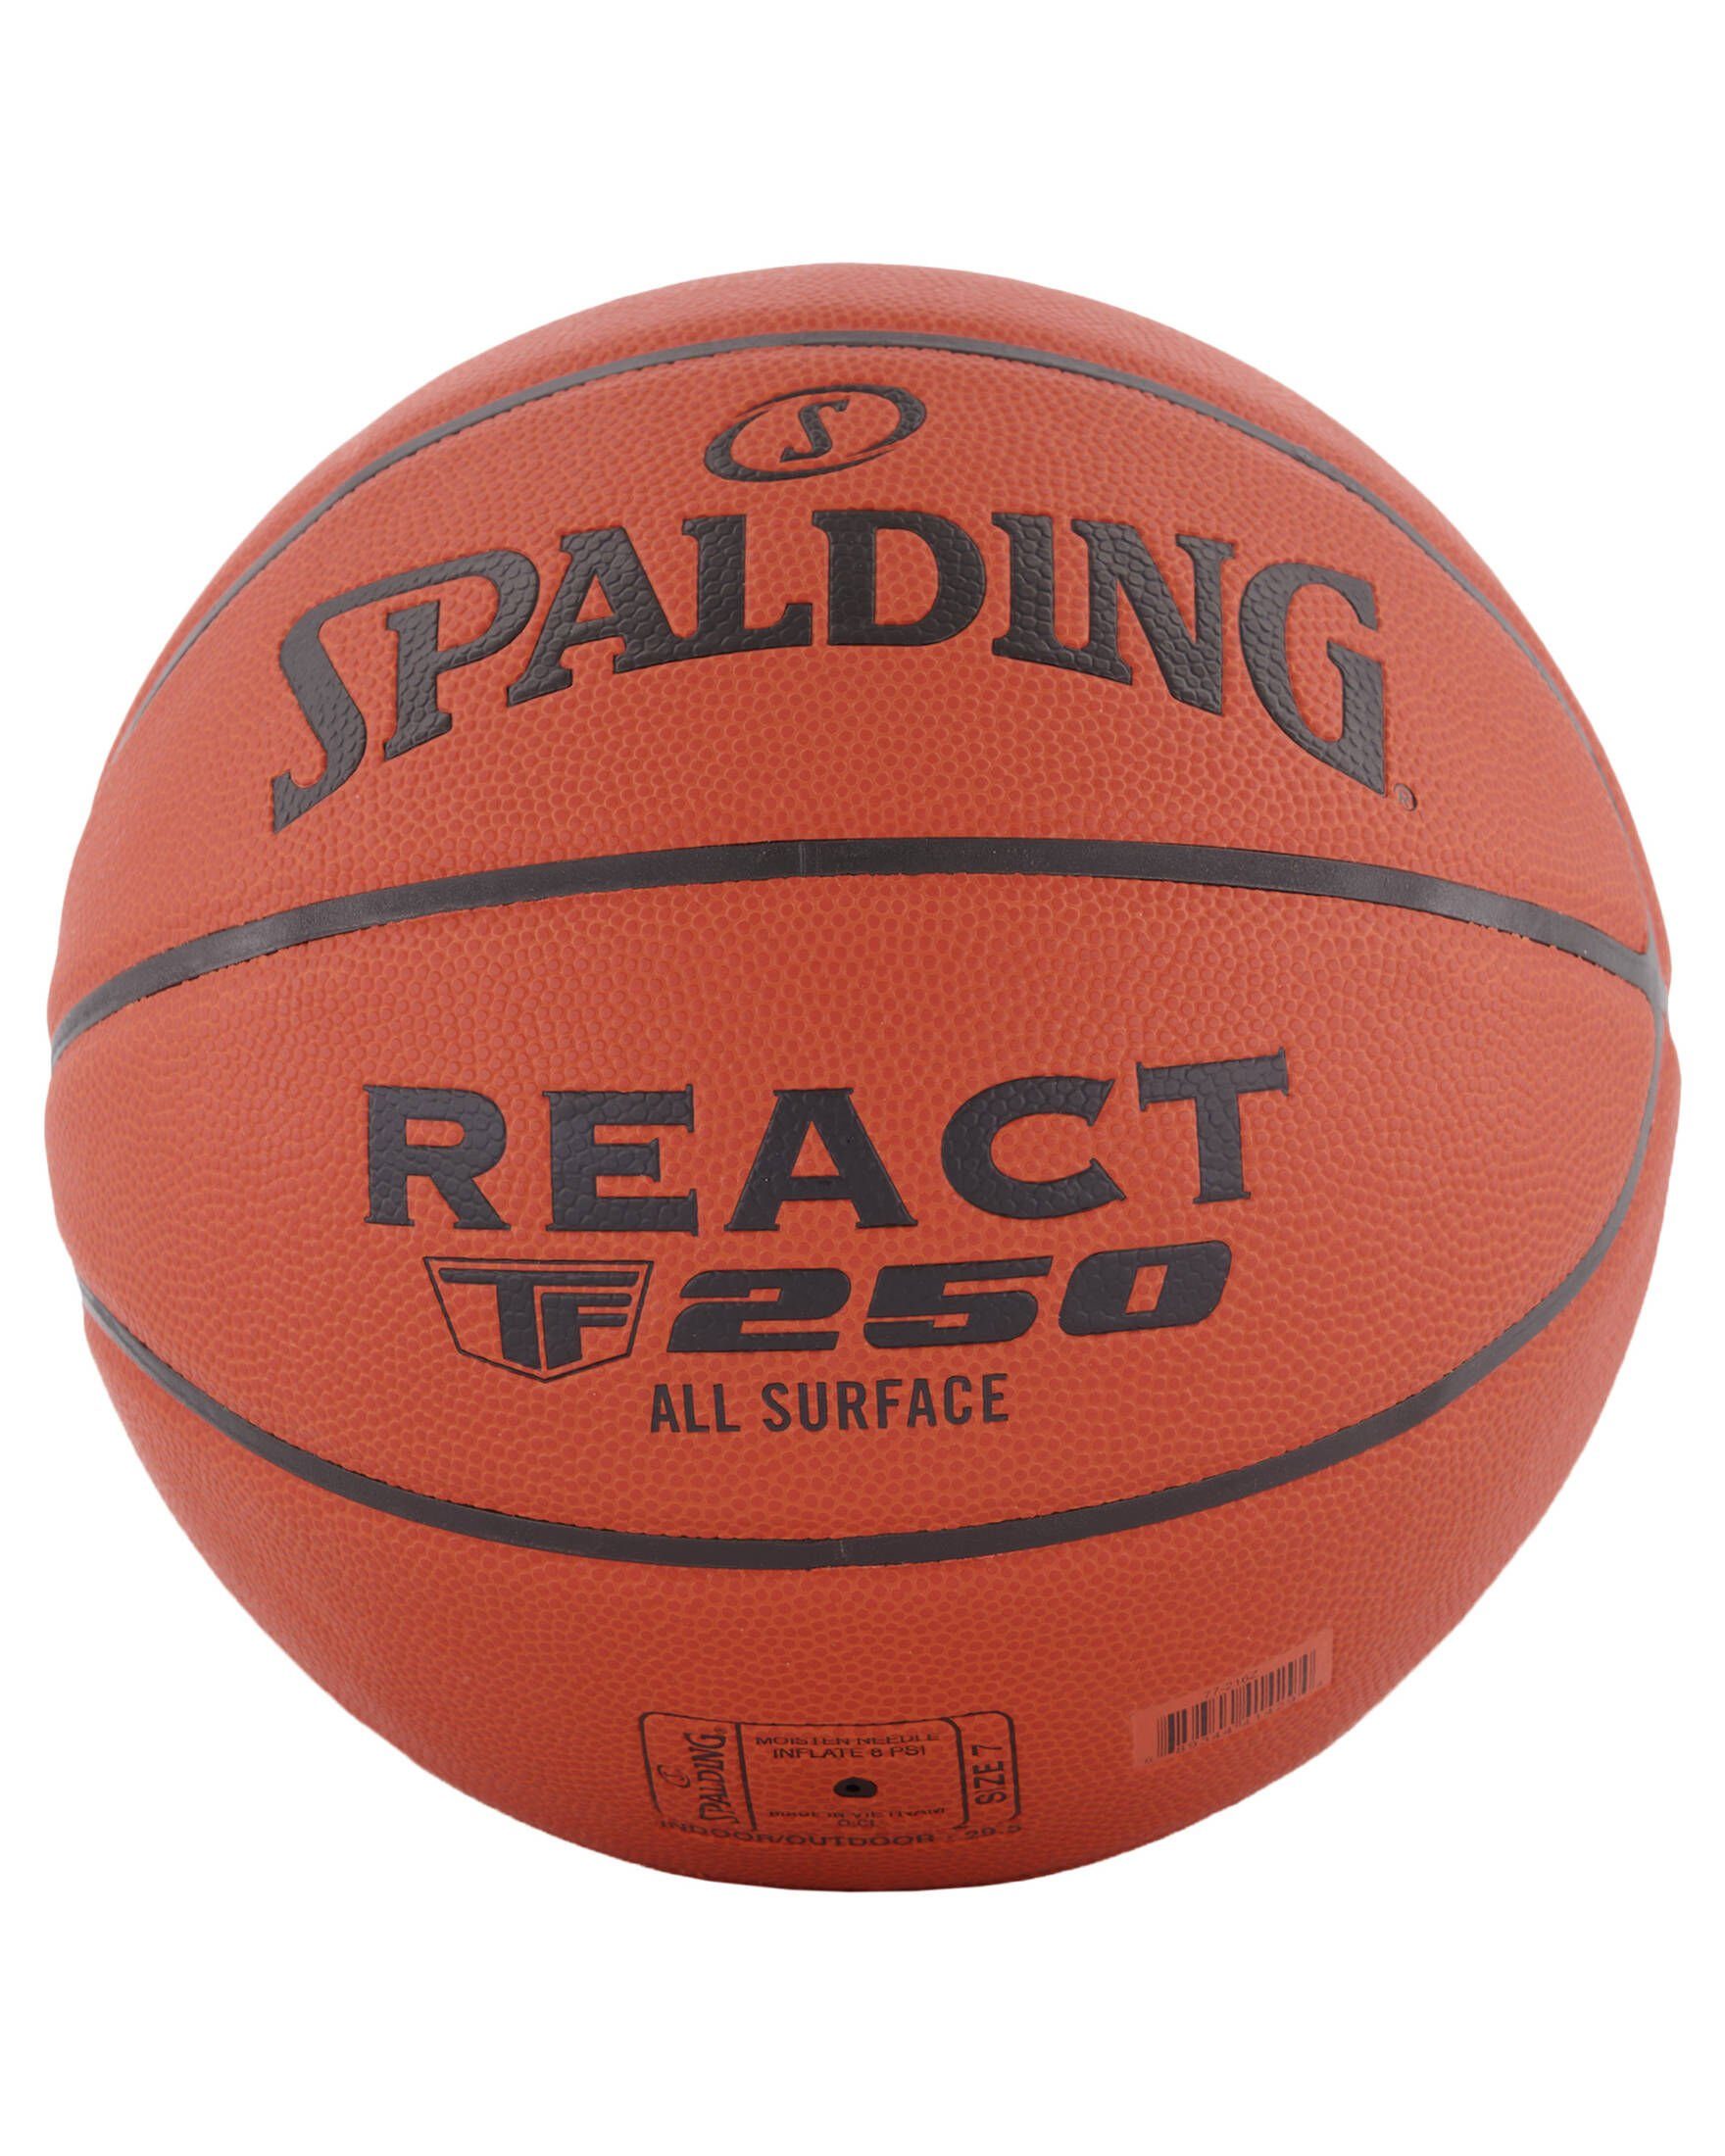 REACT 250 ORANGE Basketball SERIES Spalding Basketball TF